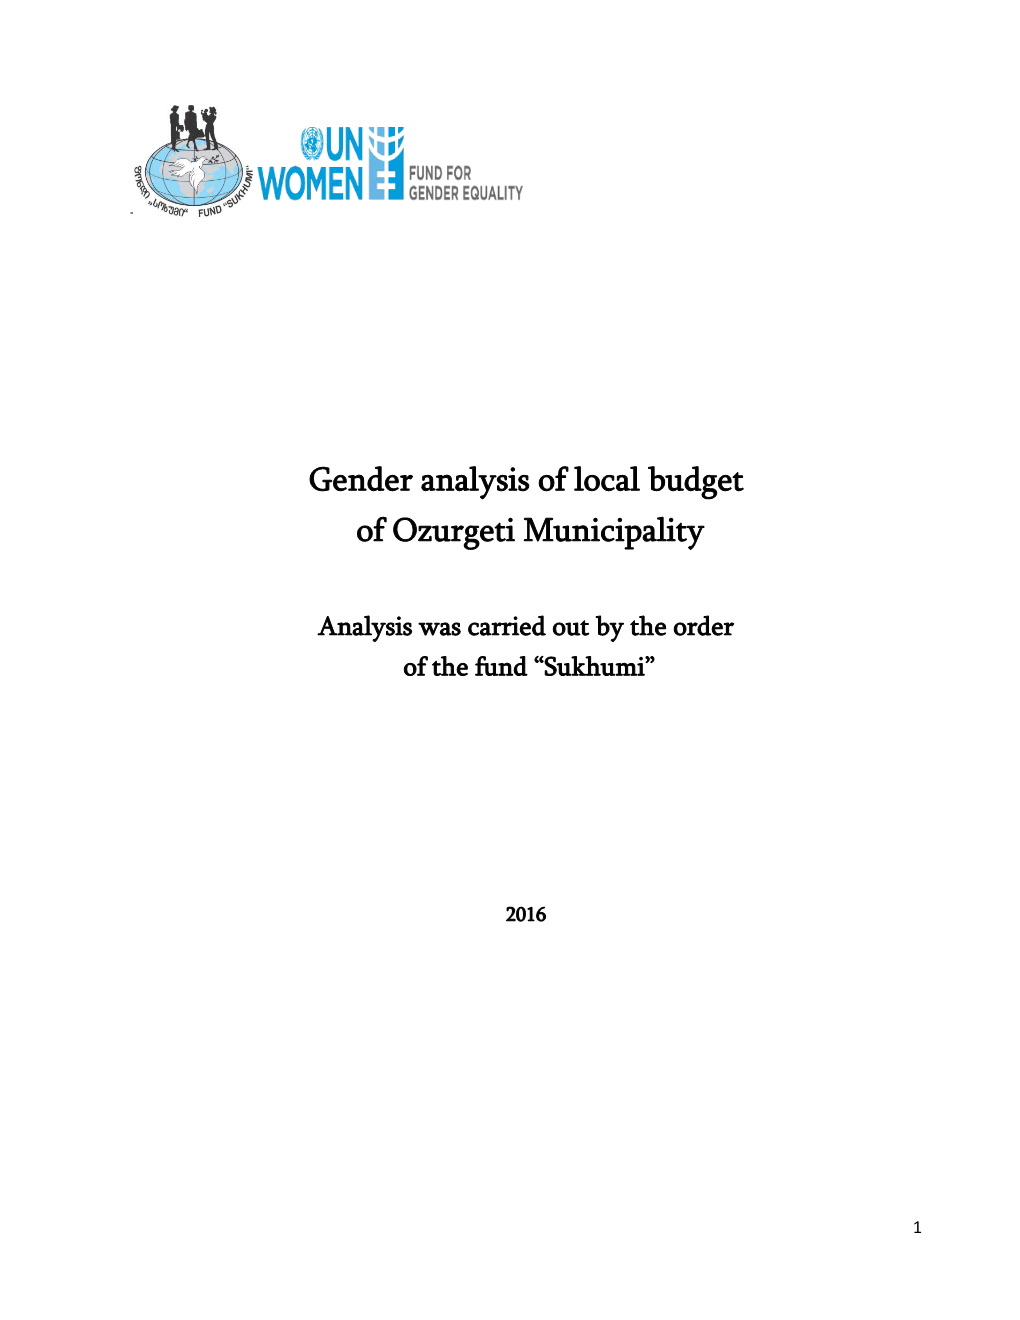 Gender Analysis of Local Budget of Ozurgeti Municipality